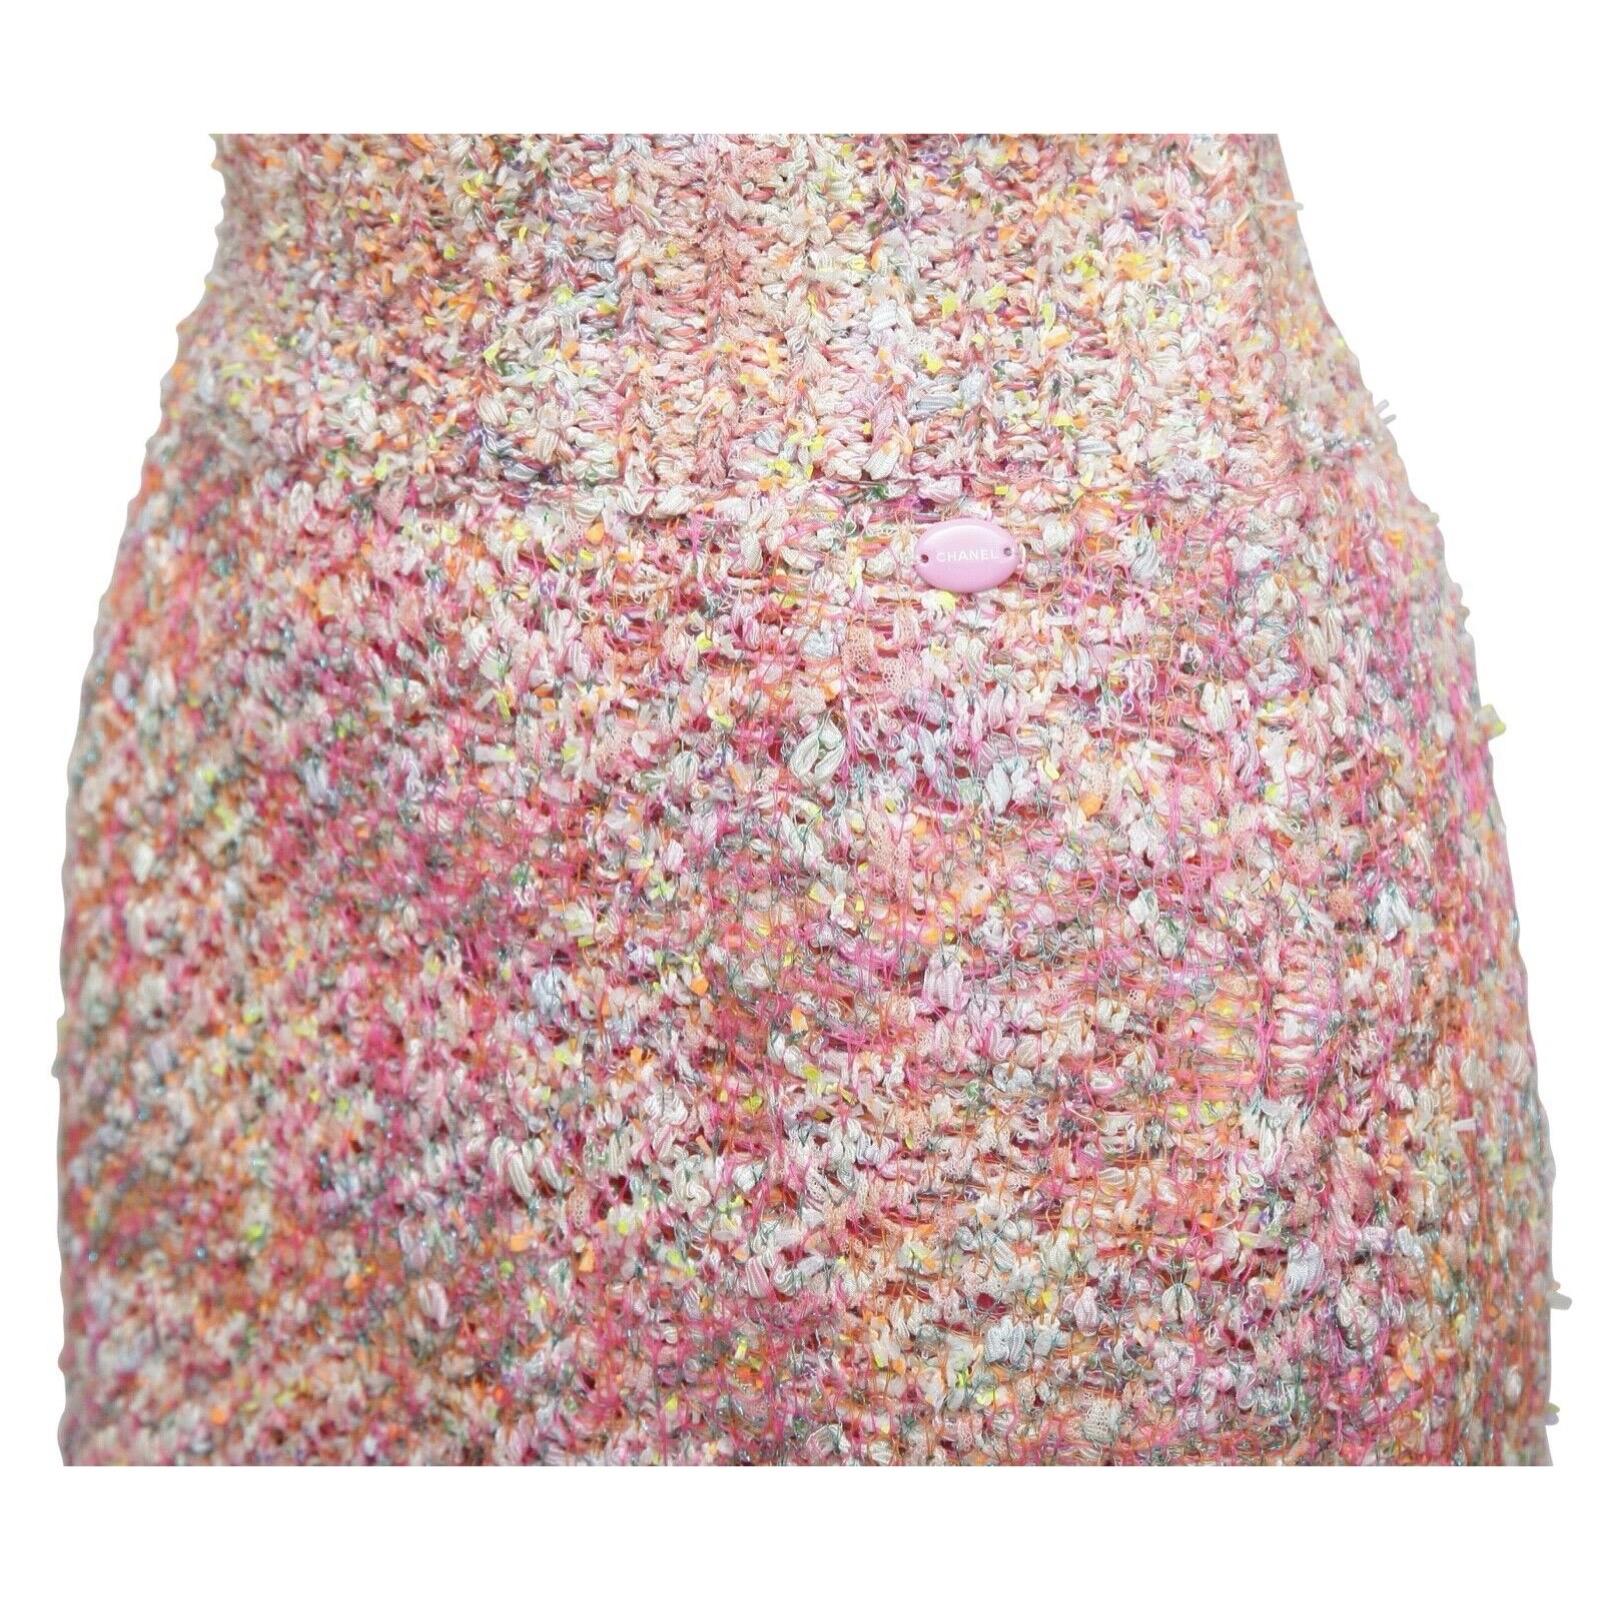 pink sequin skirt h&m